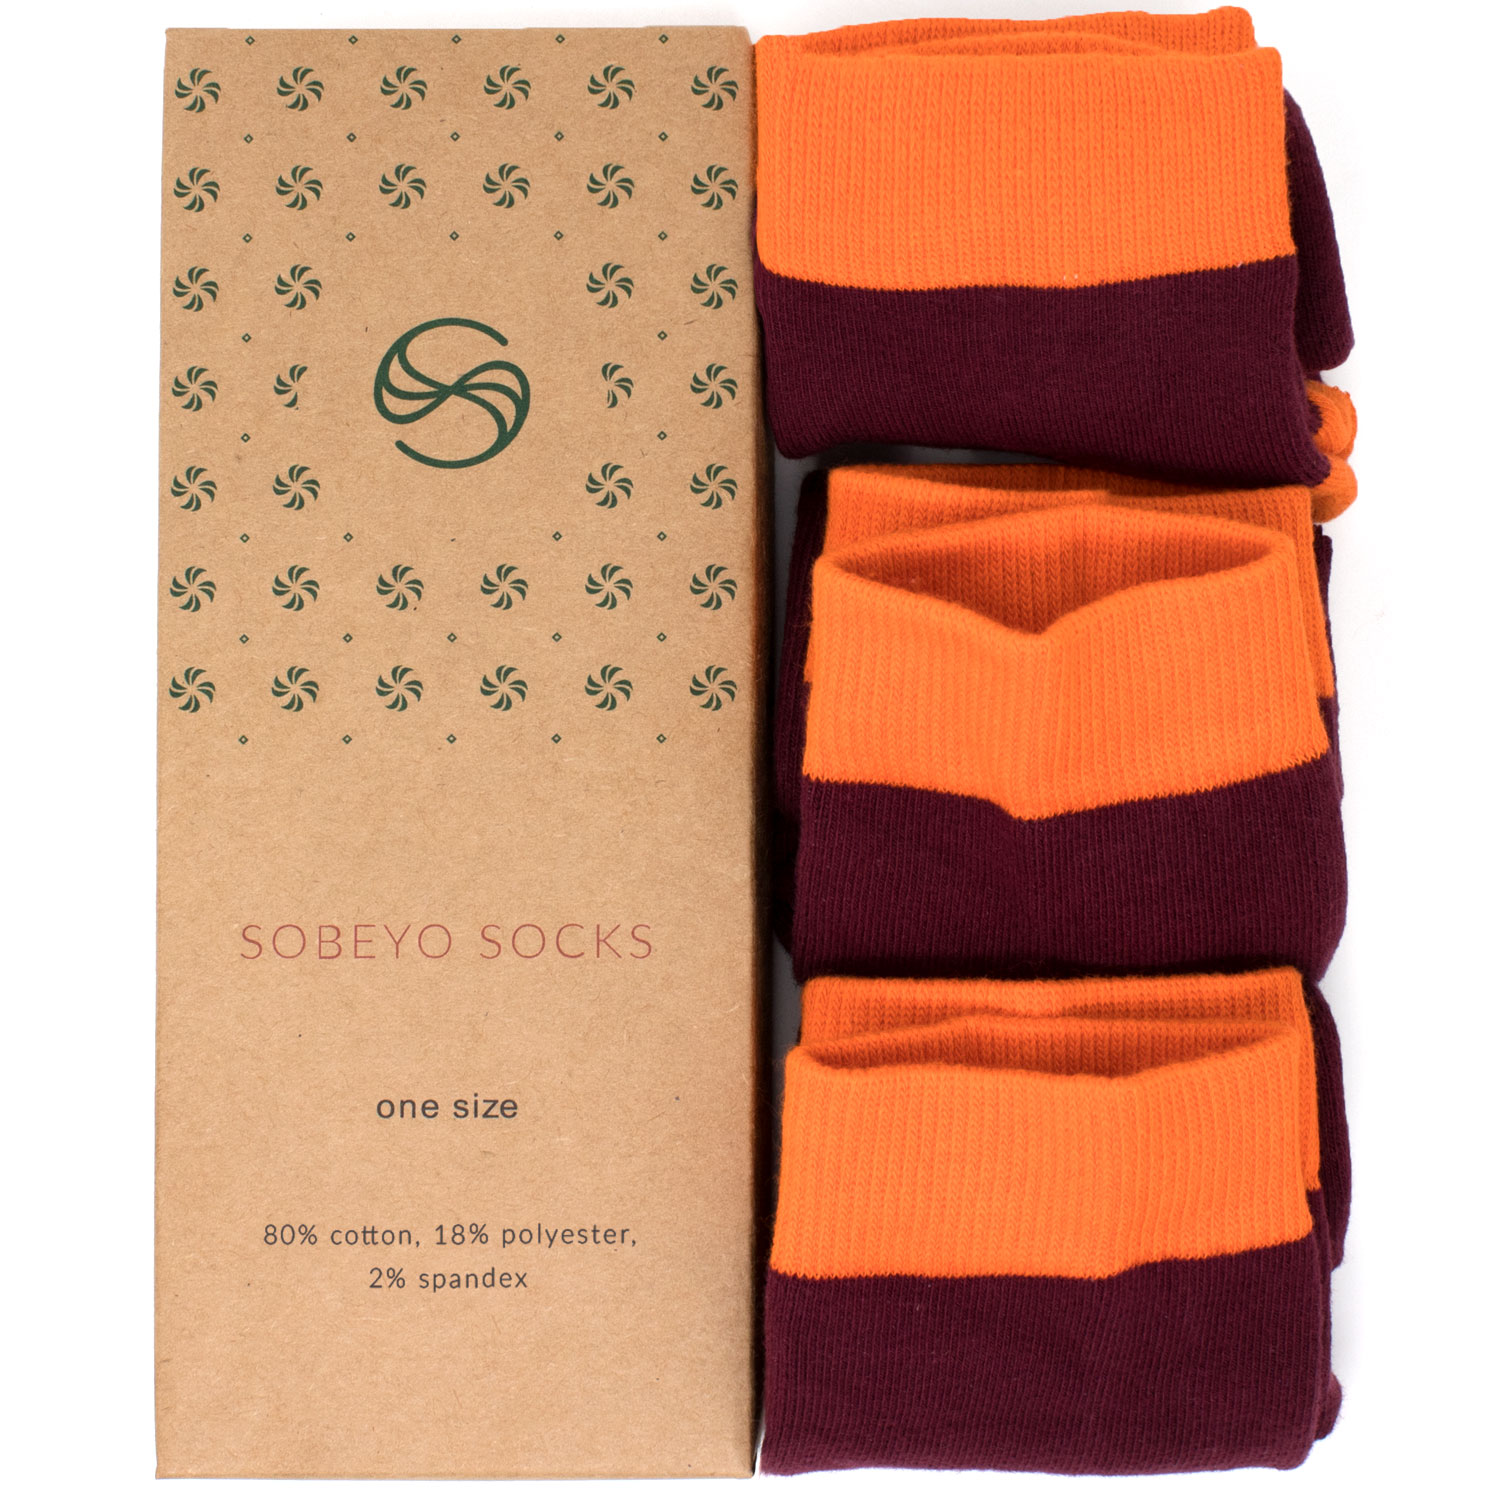 SOBEYO Women's Socks Quarter Ankle Performance Comfortable Colorblock Athletic Sock